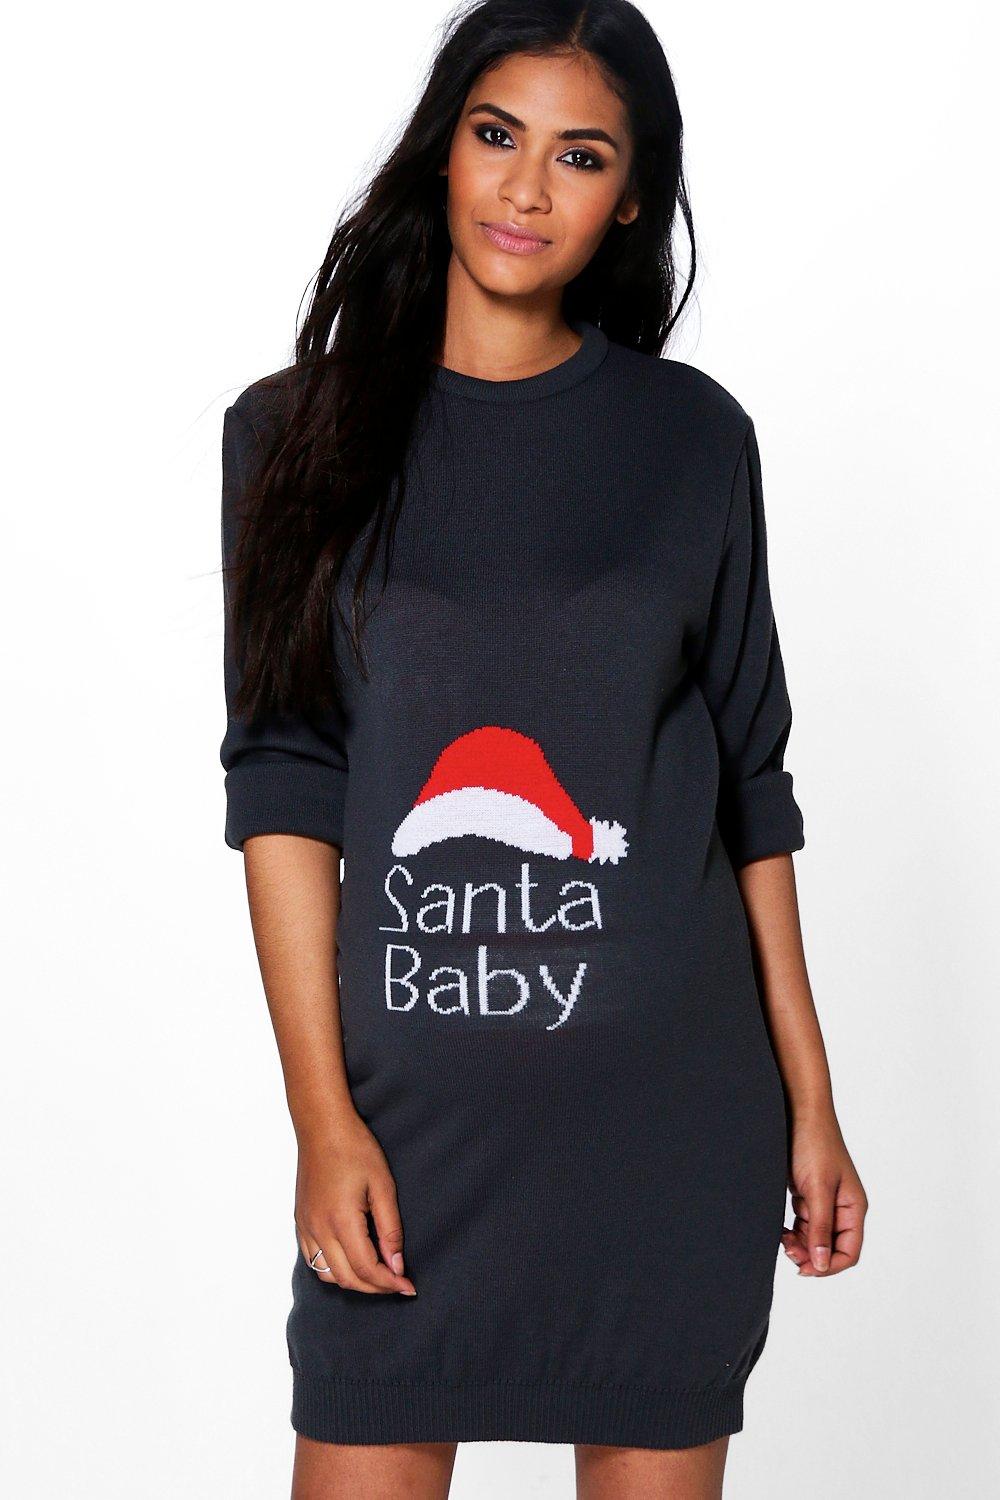 Baby Christmas Dress Canada Hot Sale ...